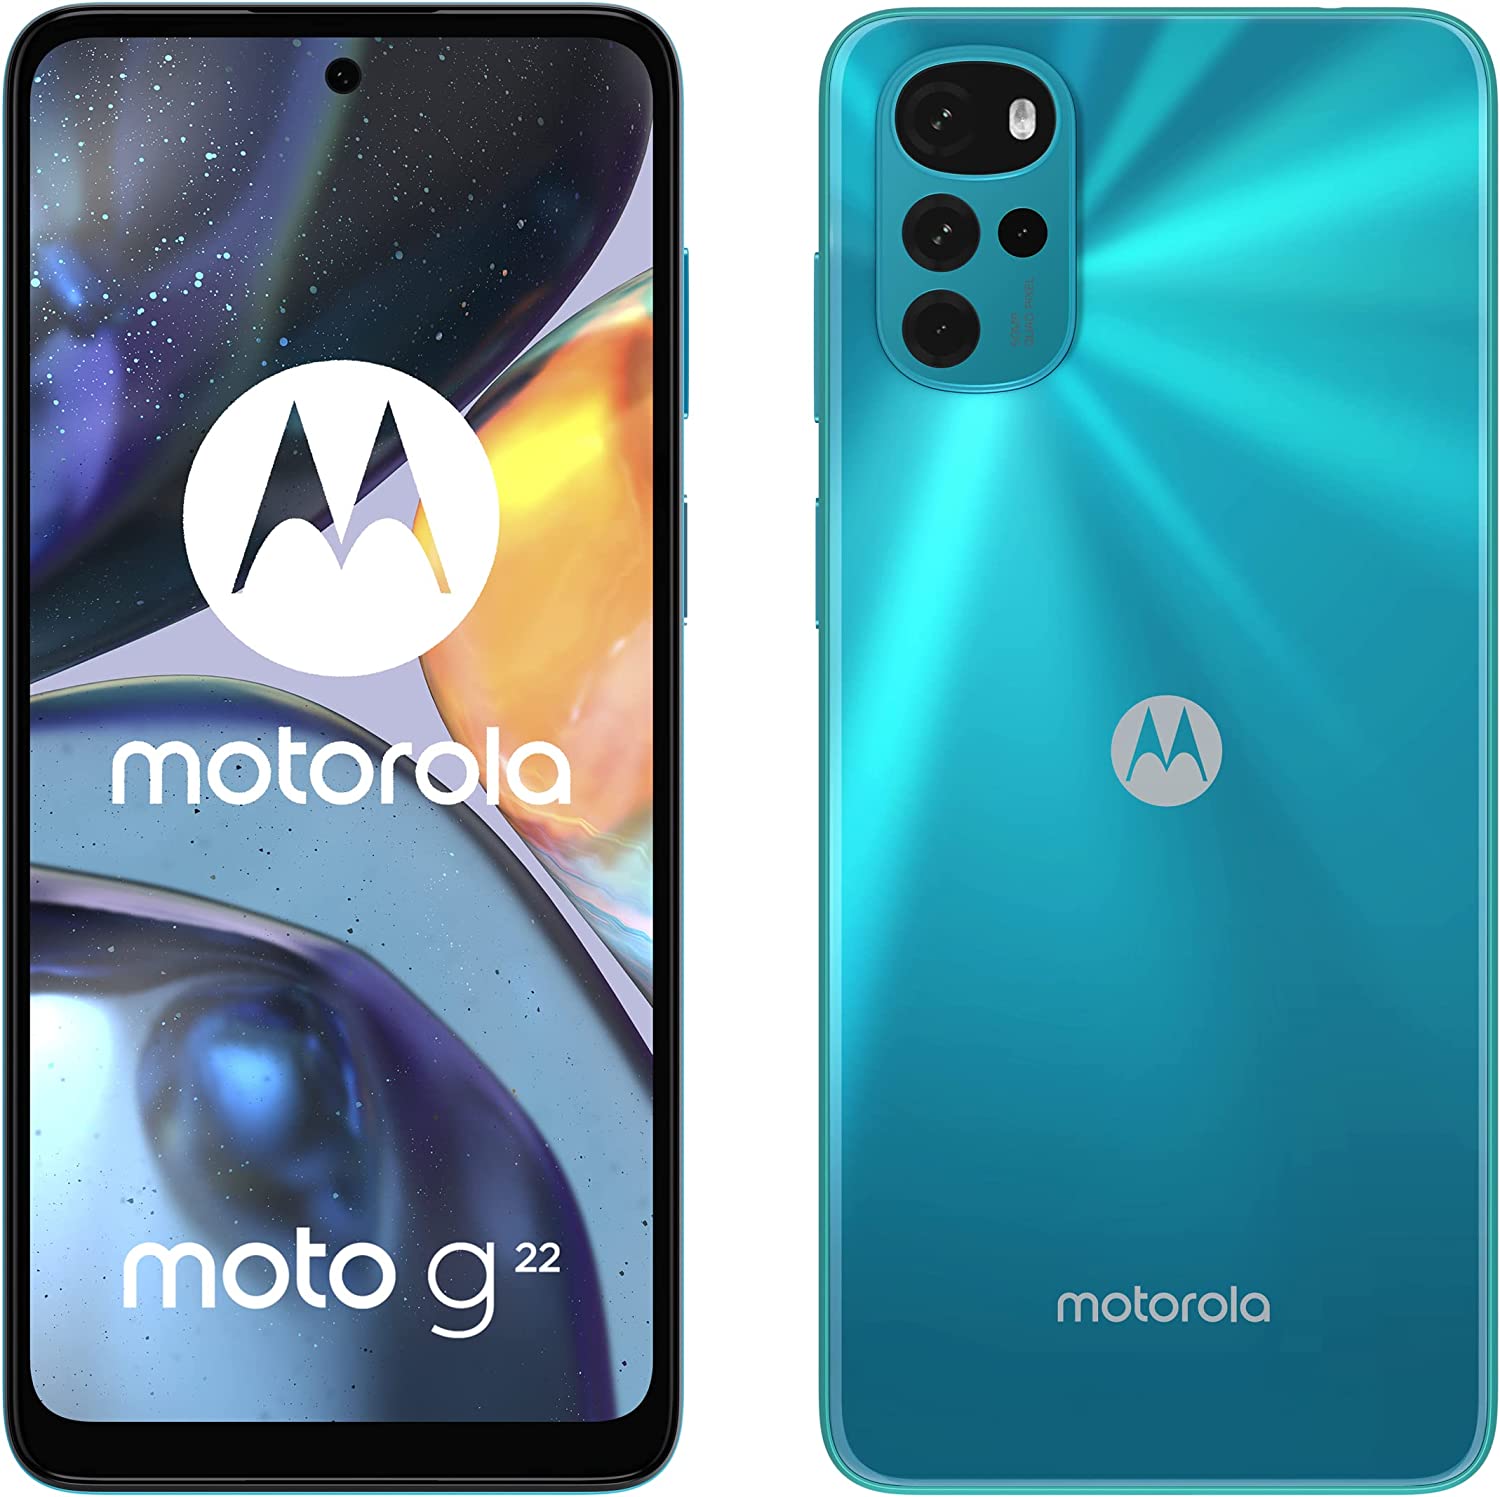 Prezzo Motorola Moto G22 in offerta: da Euronics a 139 euro